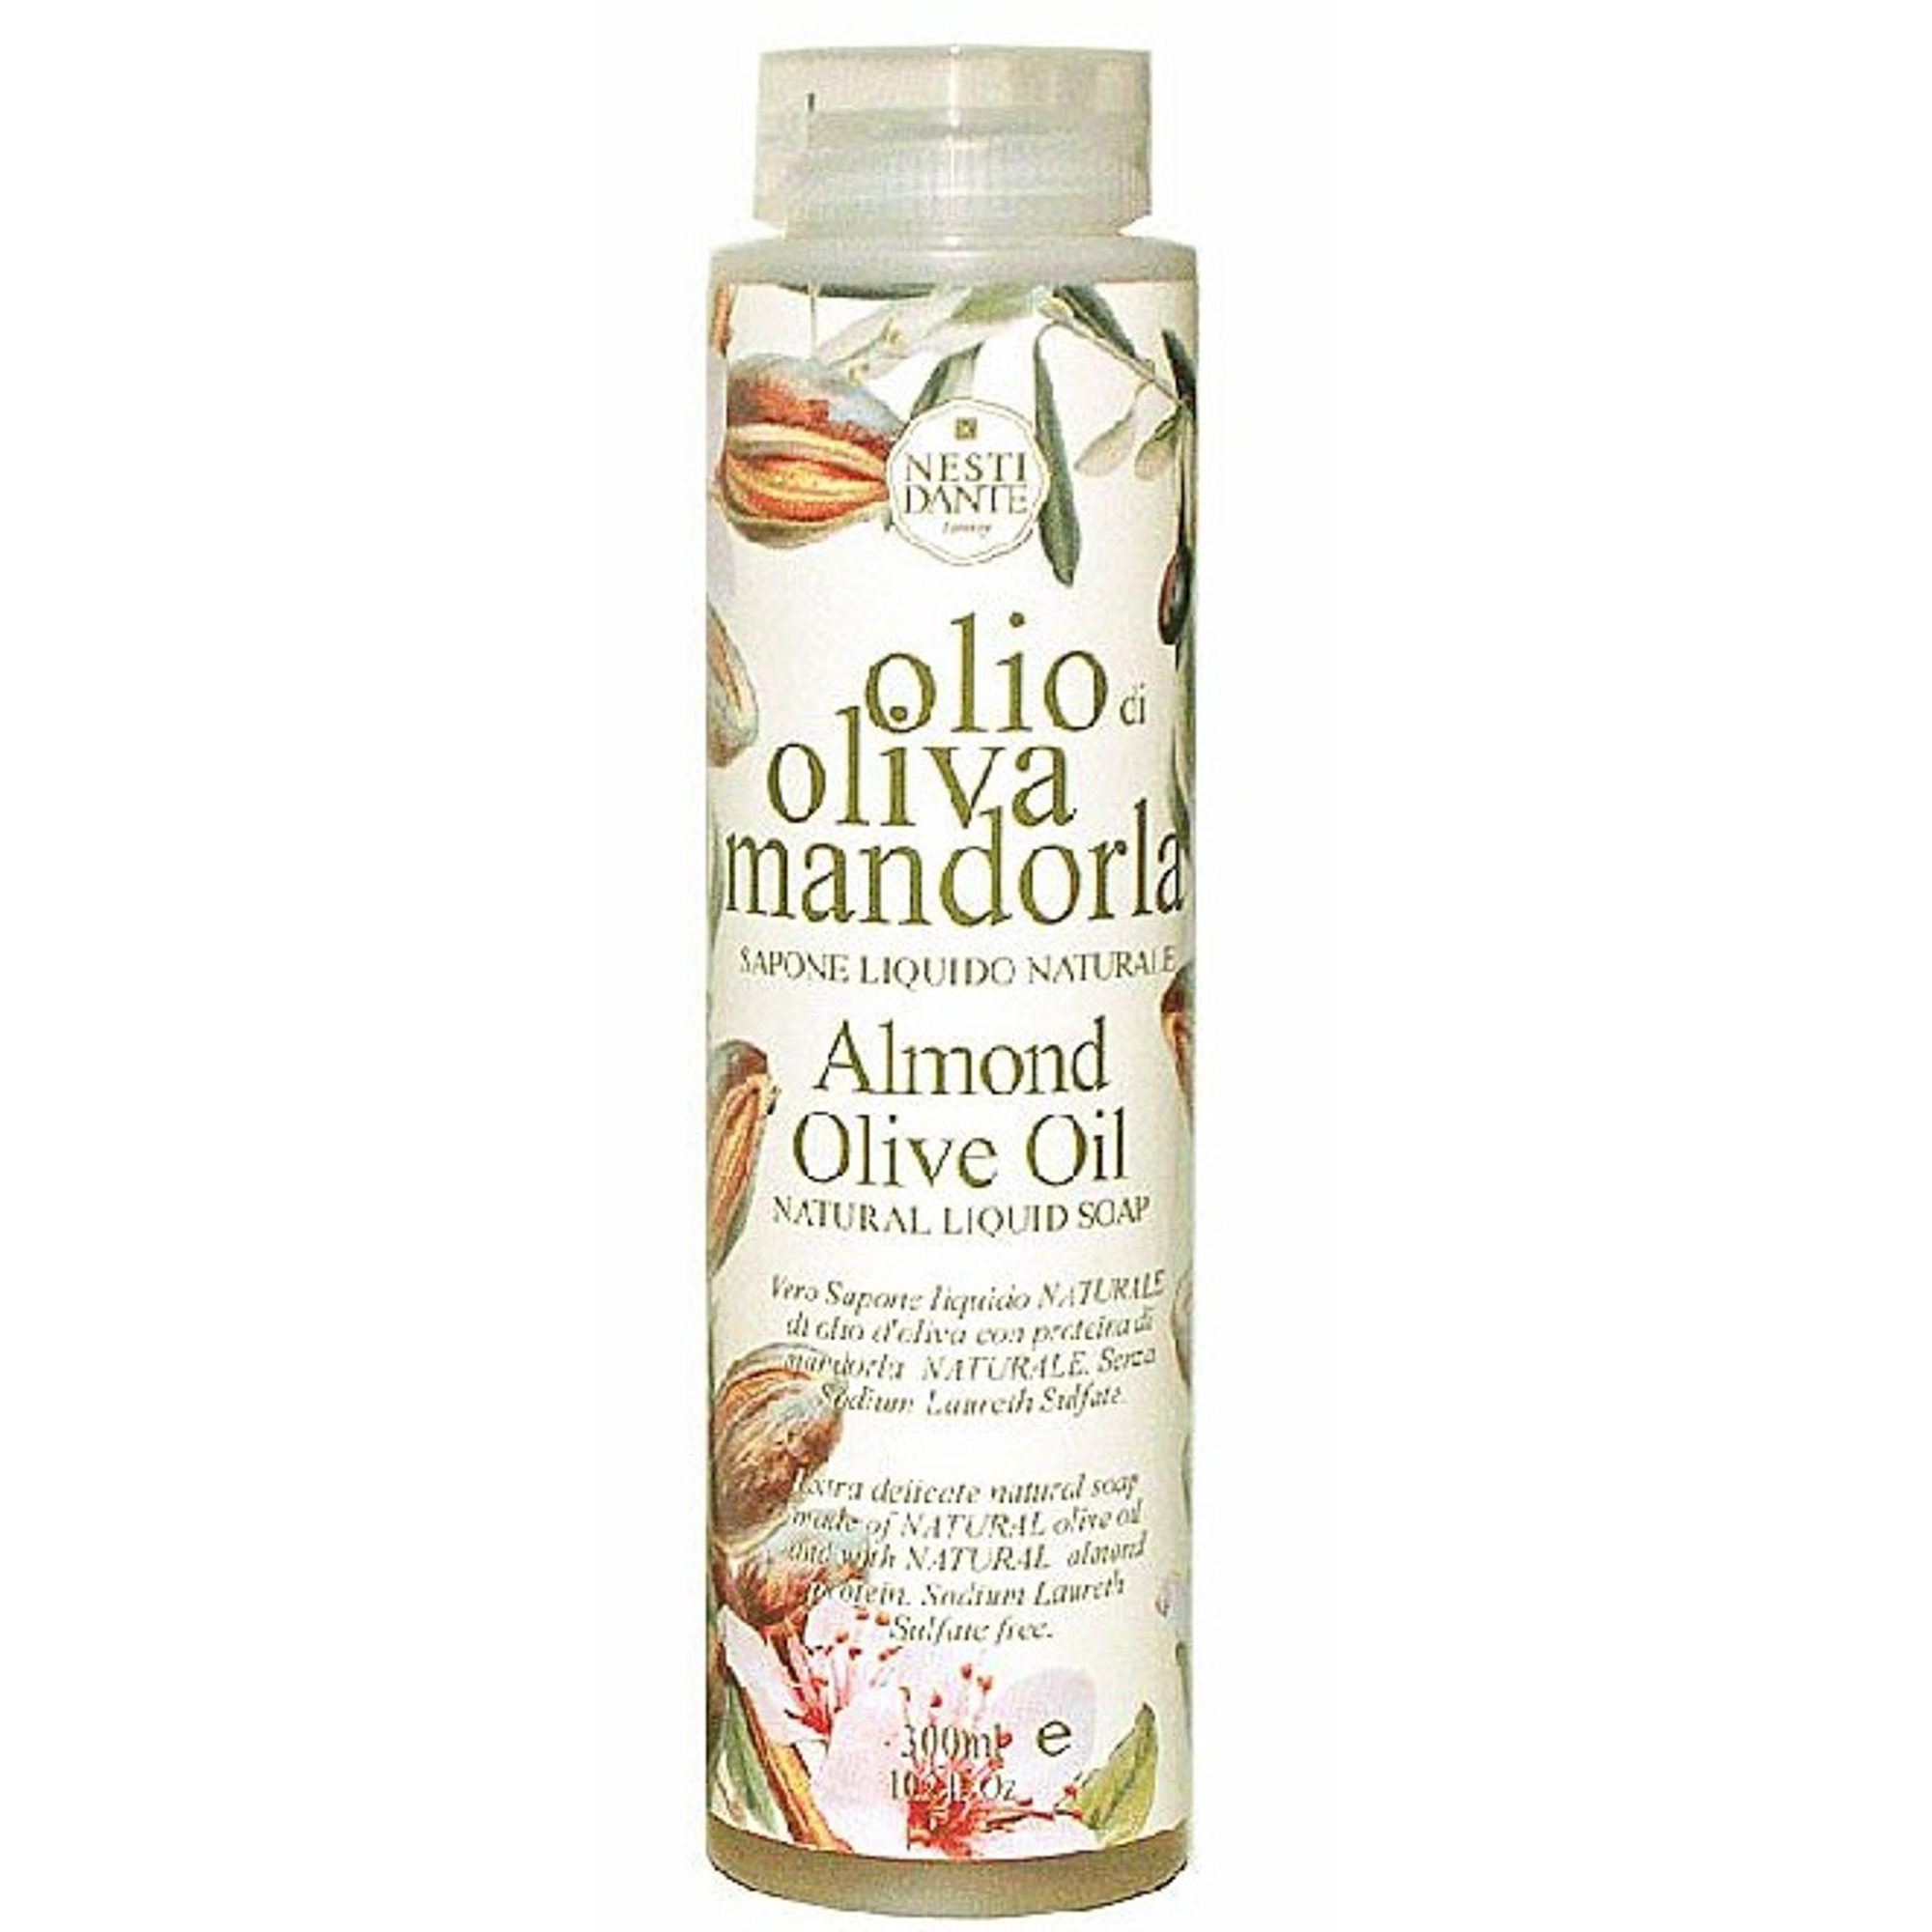 Гель для душа оливковое масло/мандарин 300мл Nesti dante